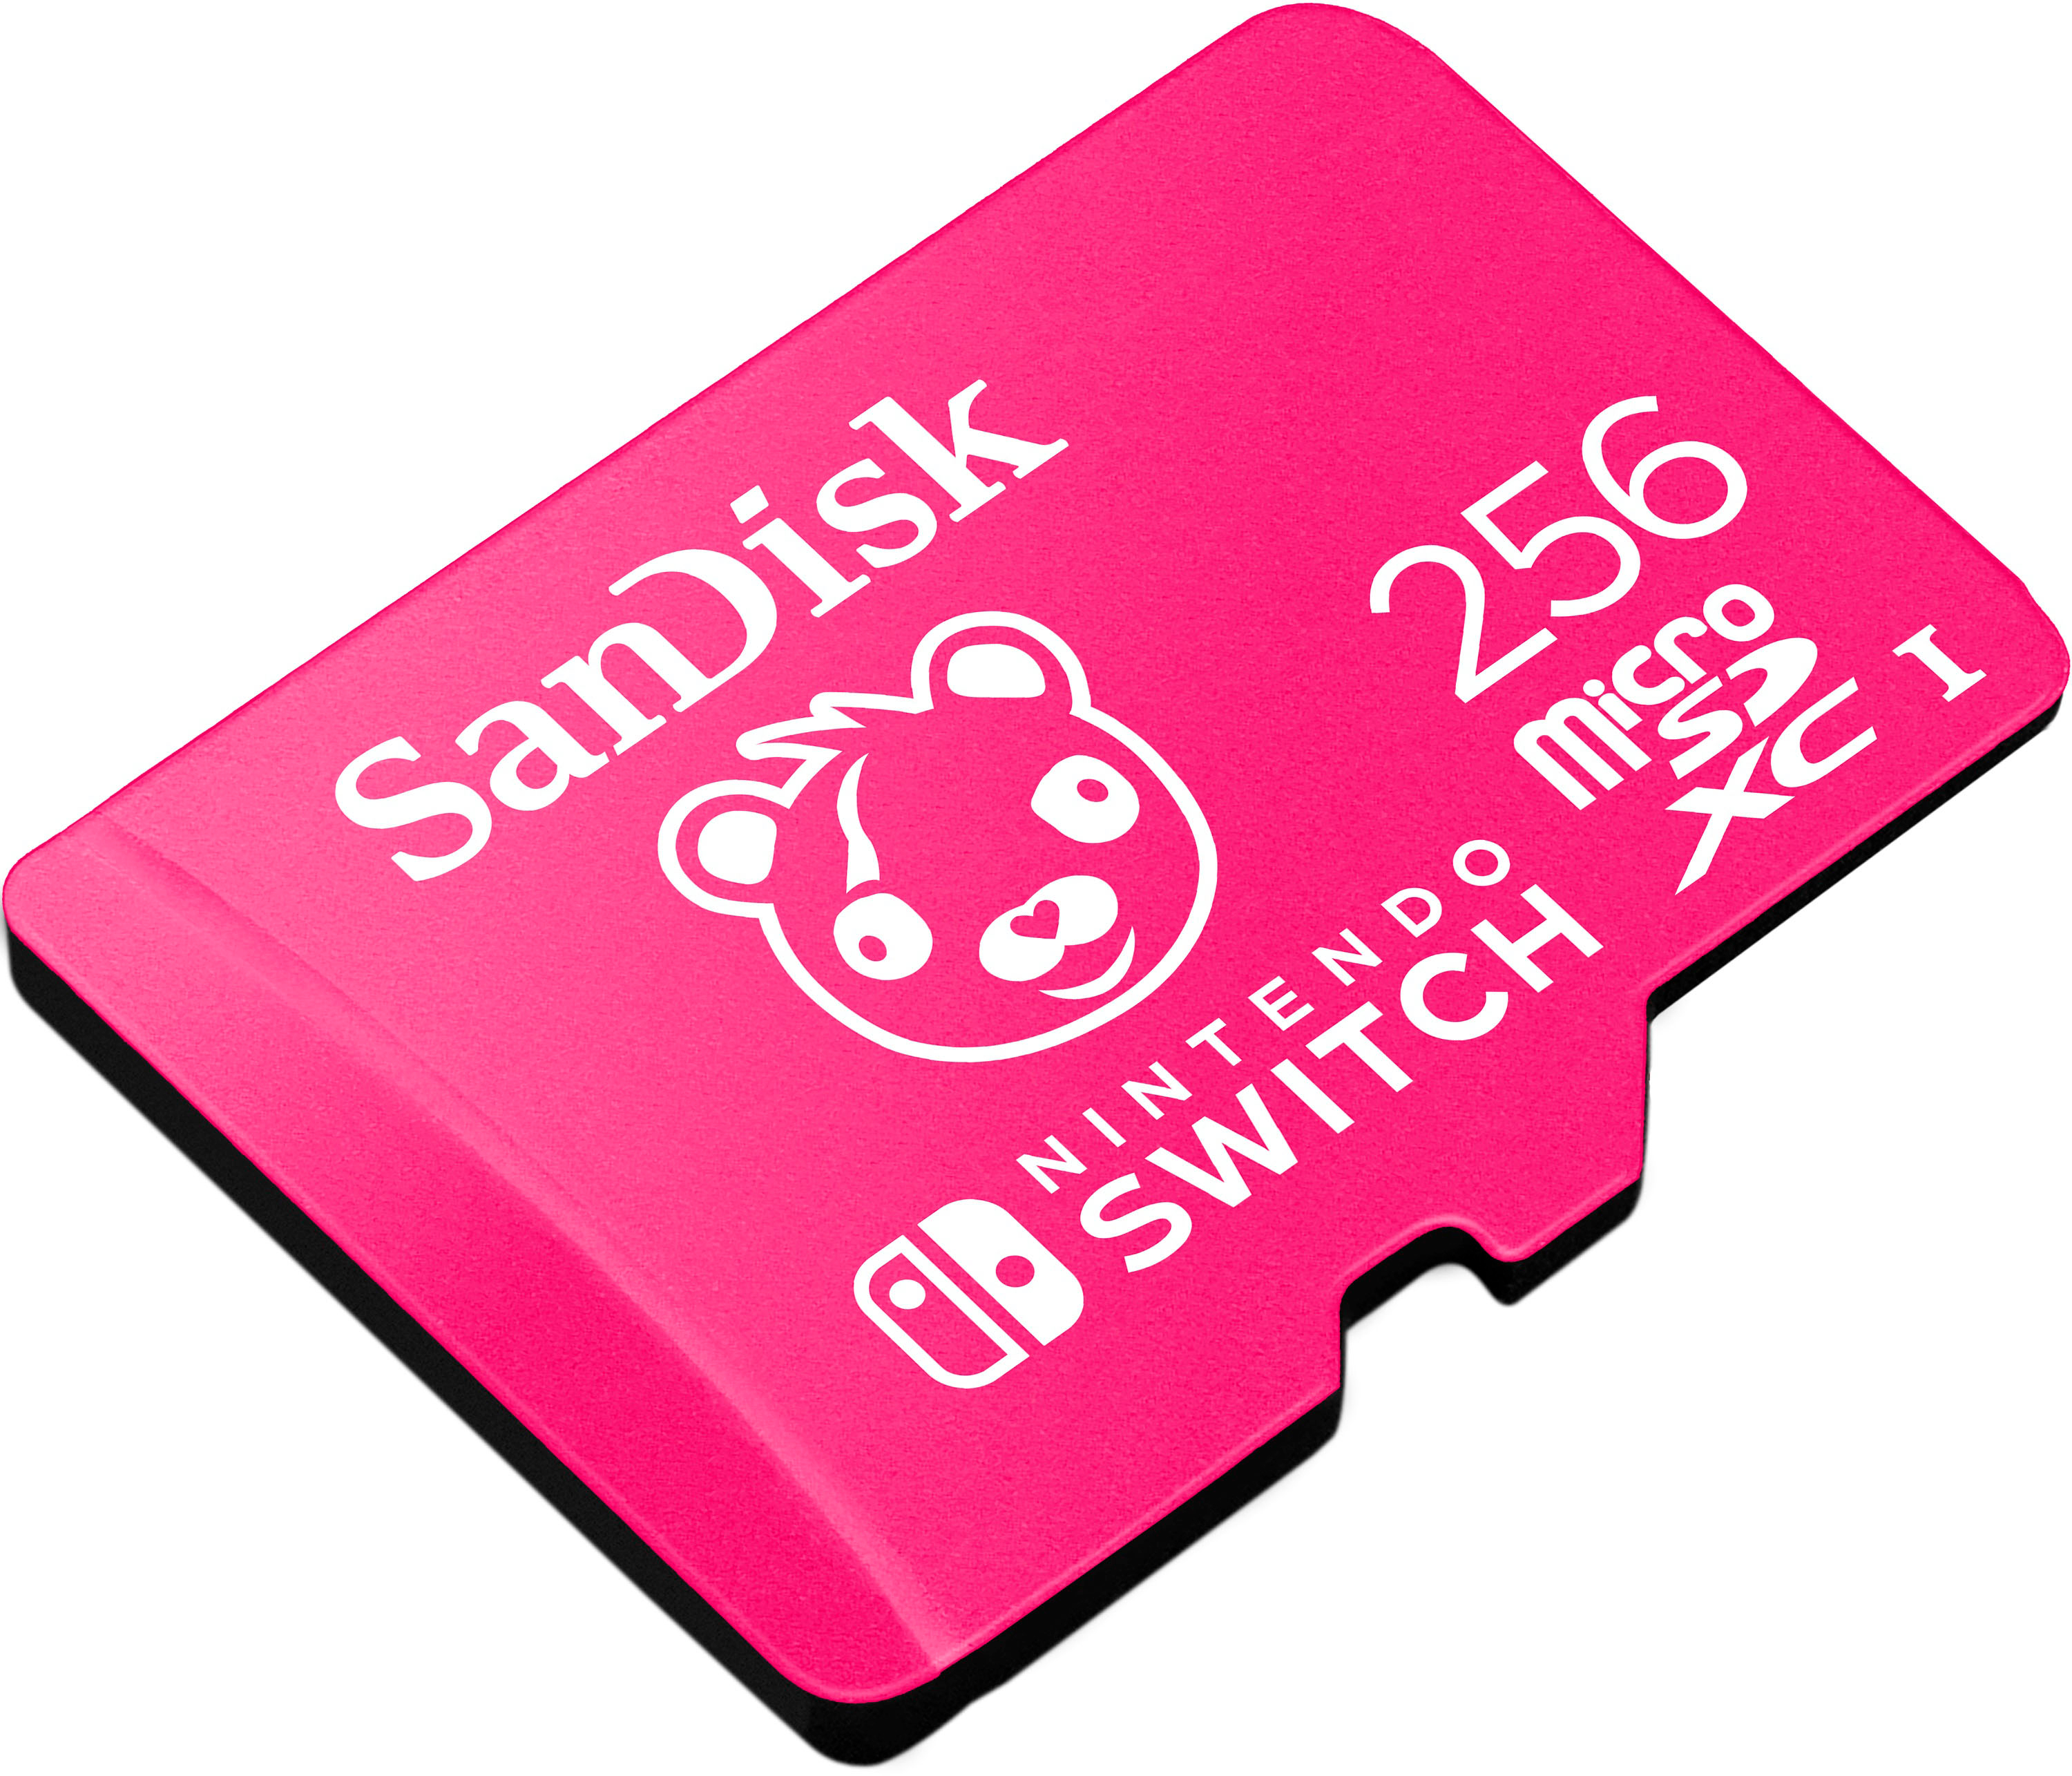 SanDisk Nintendo Switch microSDXC Review - STG Play